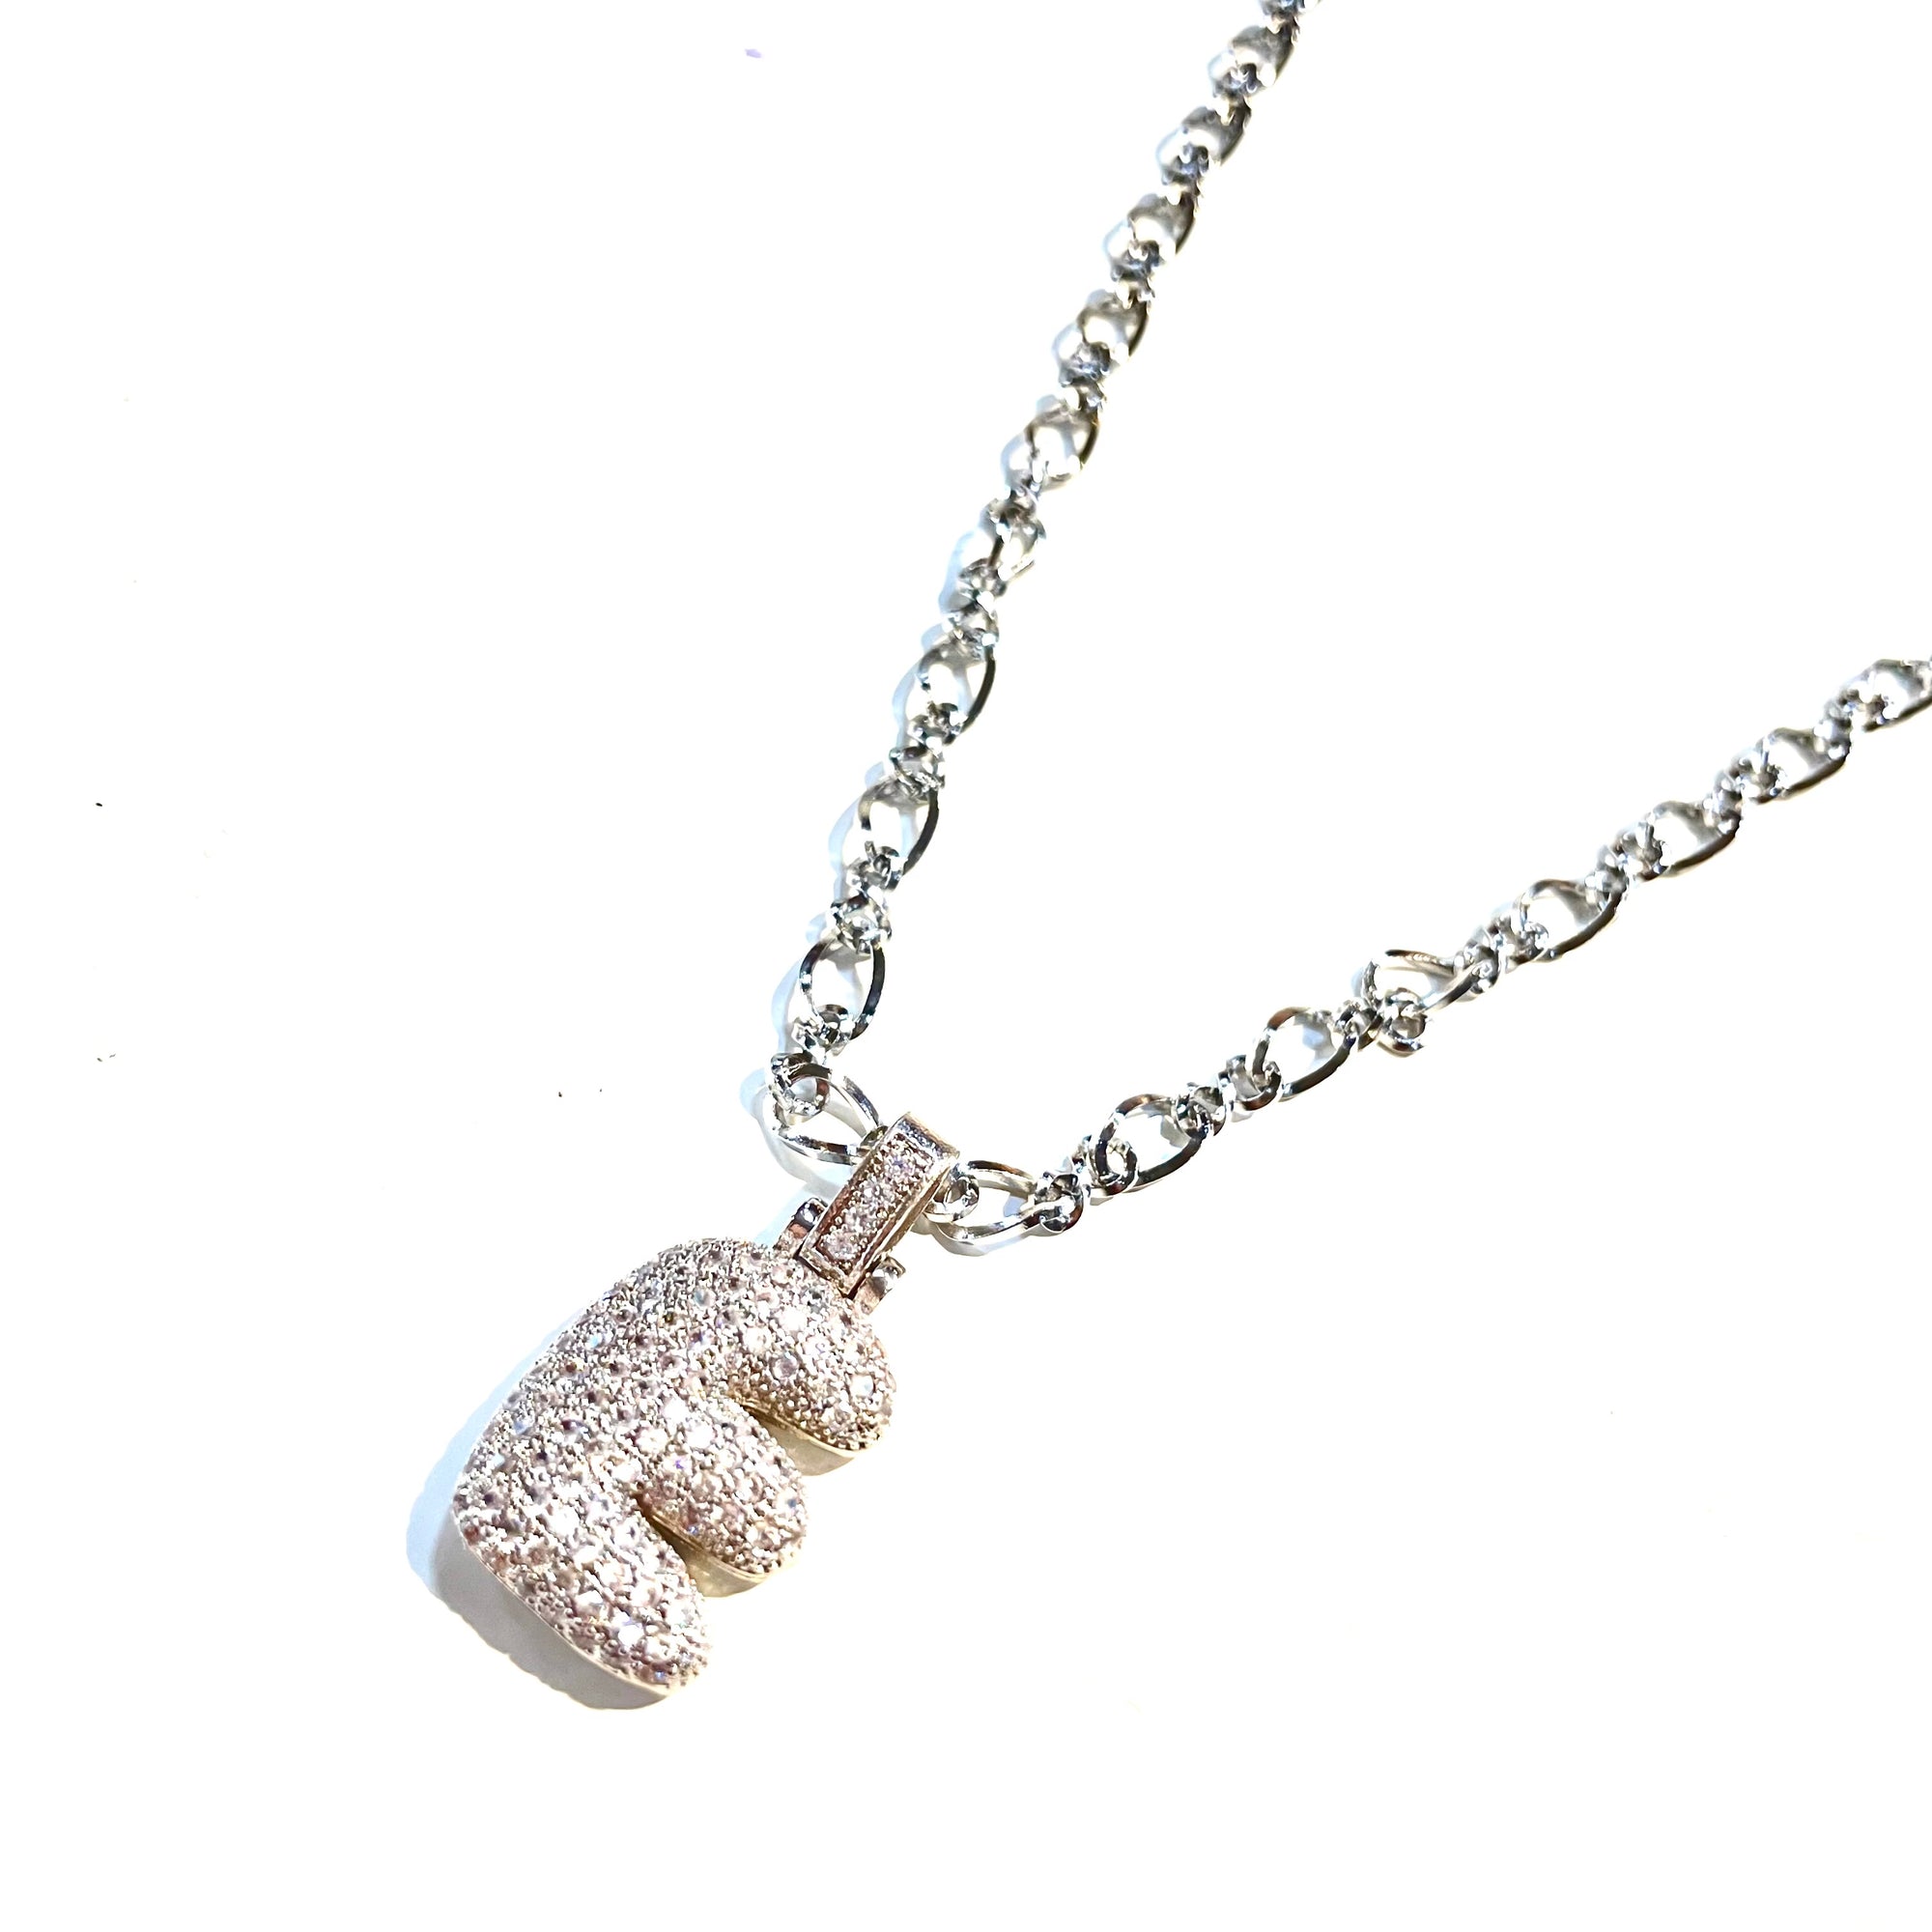 Initial Impression Necklace Necklaces Cerese D, Inc. Silver E 